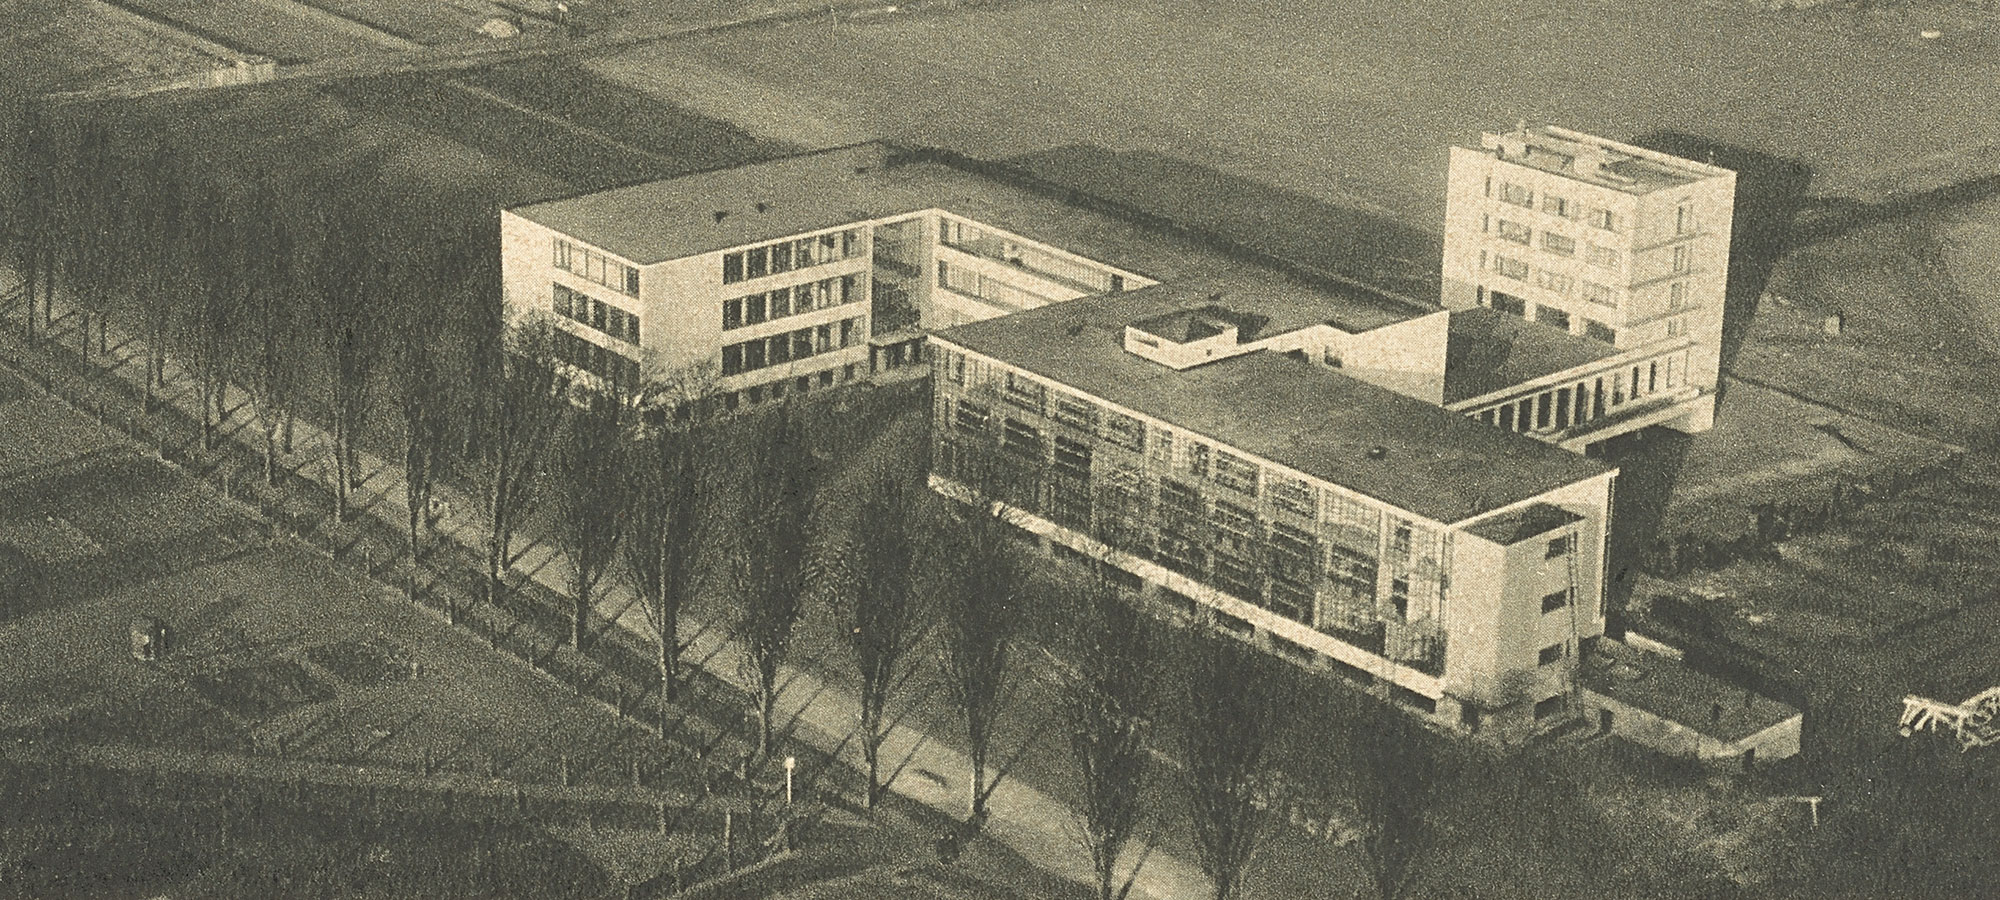 History of the Bauhaus | Bauhaus